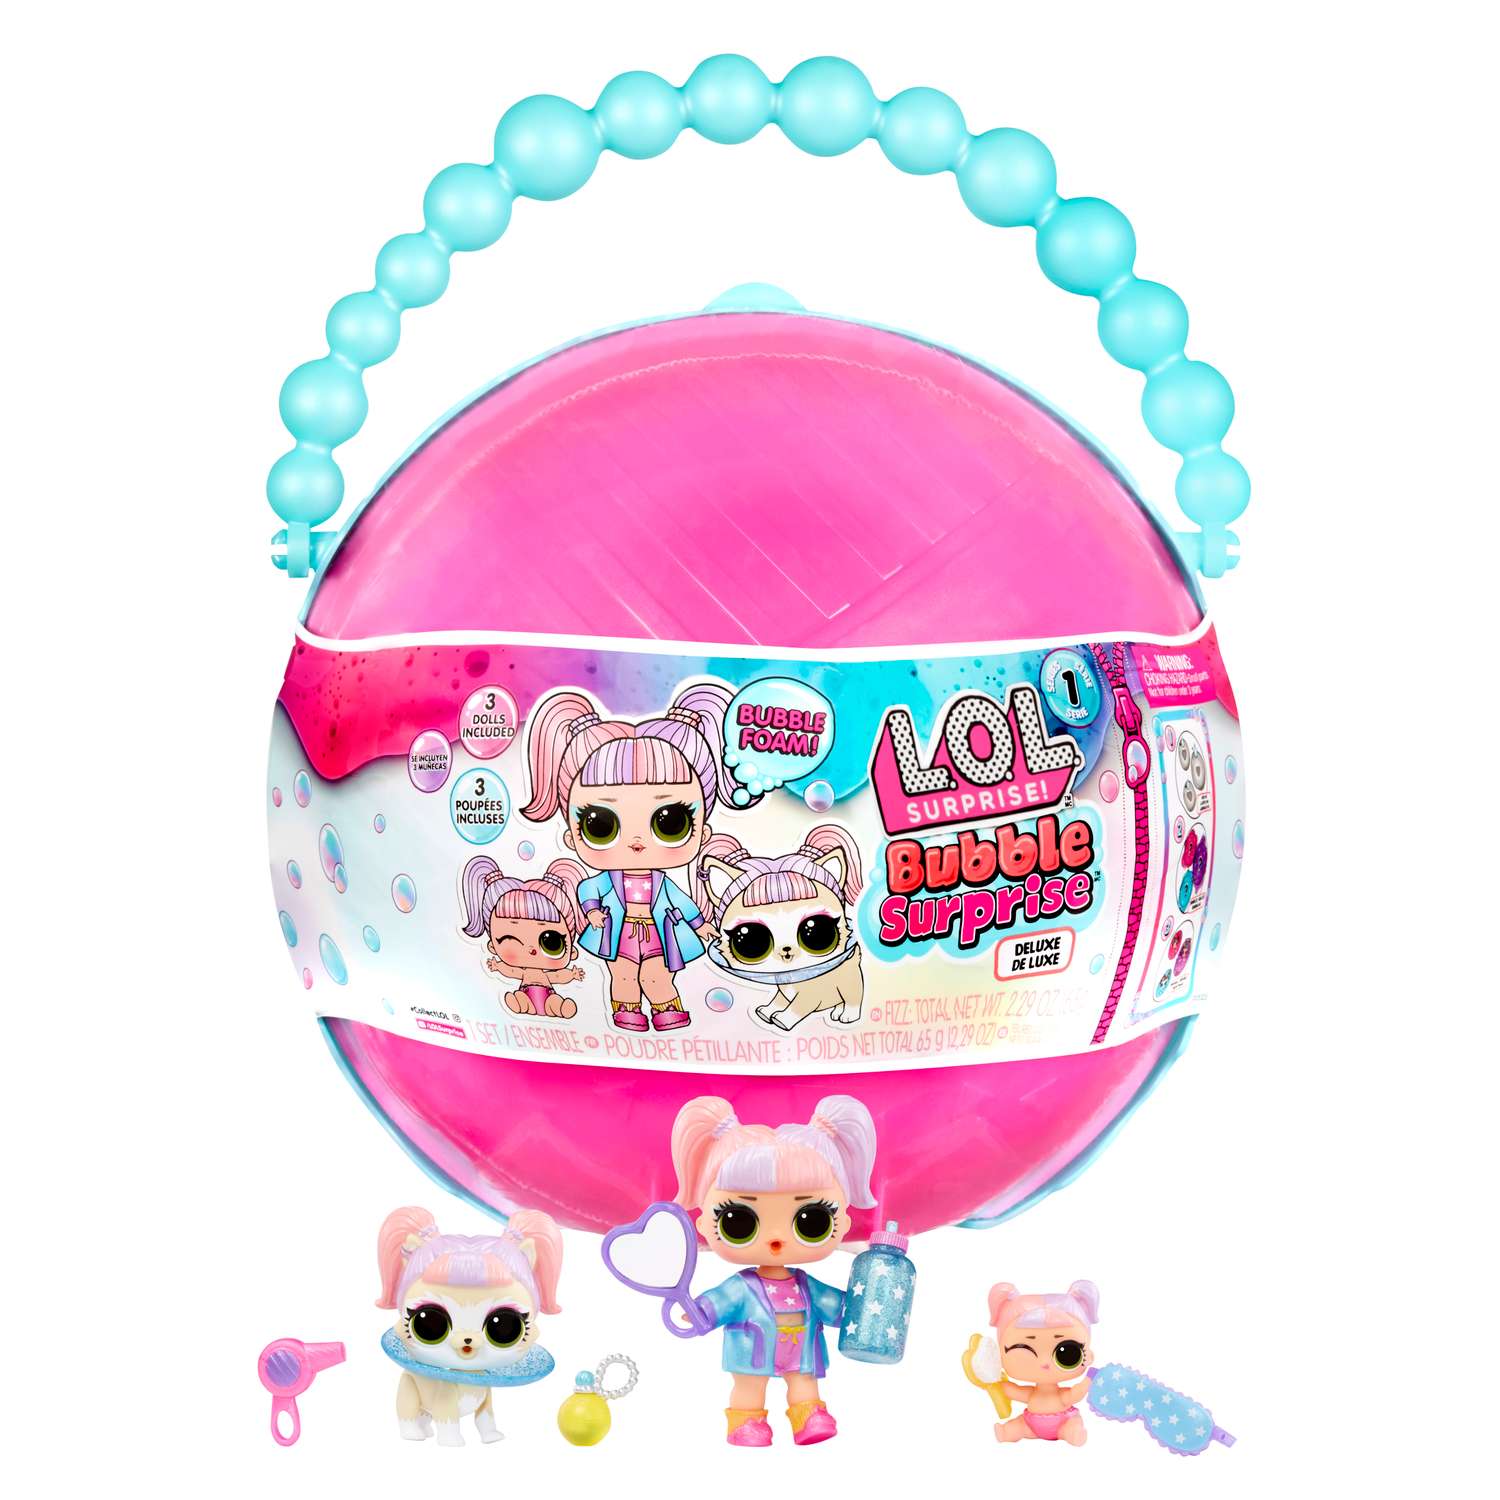 Кукла LOL Surprise Bubble Surprise Deluxe в непрозрачной упаковке (Сюрприз) 119845EU 119845EU - фото 1